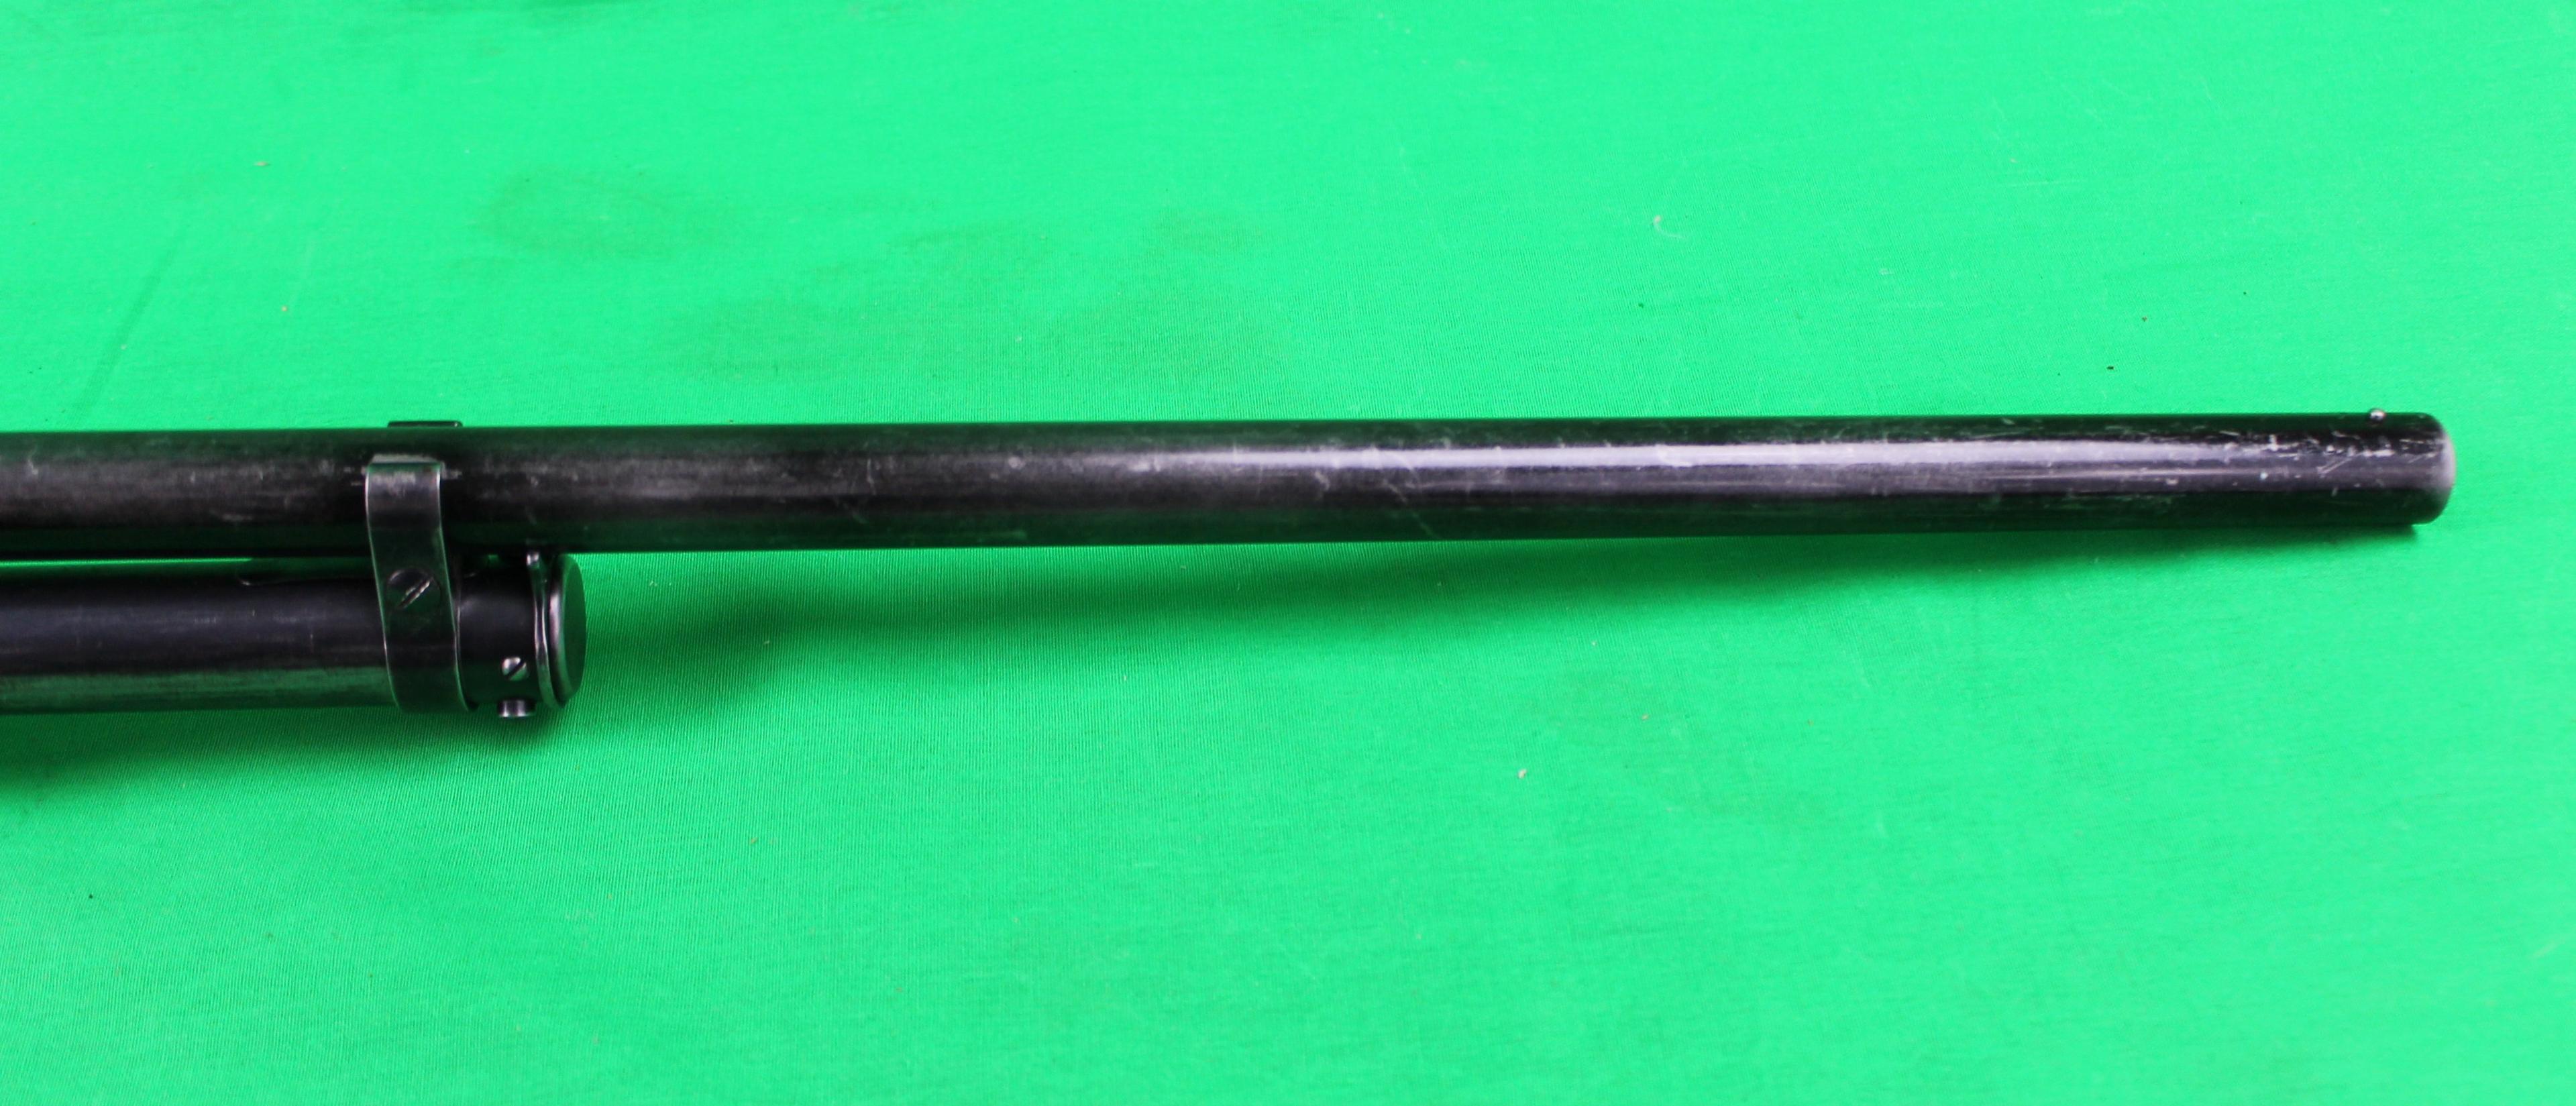 Winchester 12 12 GA Rare Stainless Steel, Takedown